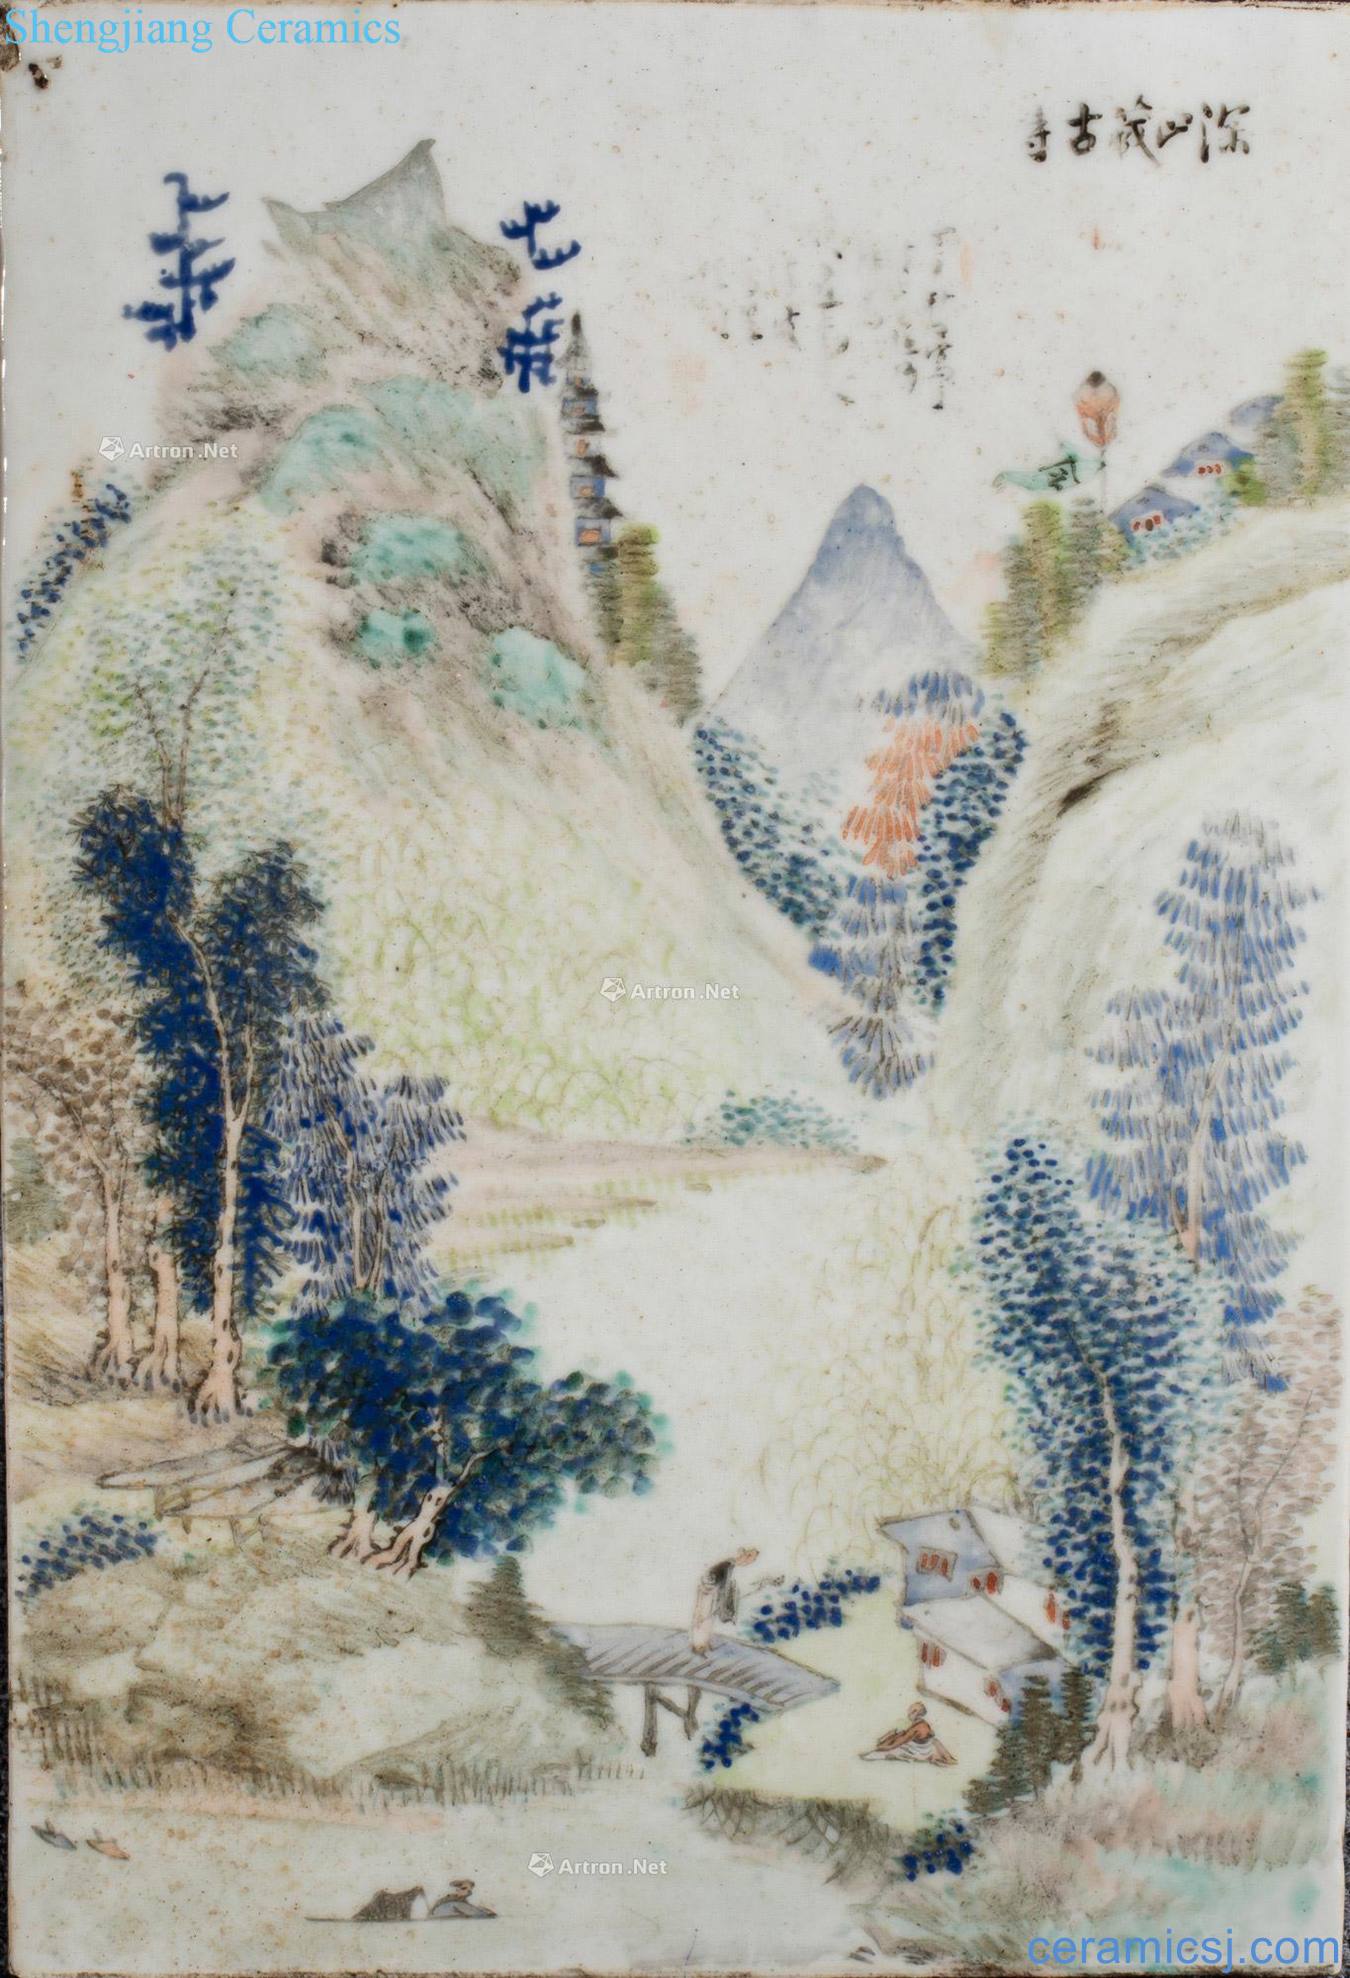 Cheng door reign of qing emperor guangxu shallow color landscape porcelain plate